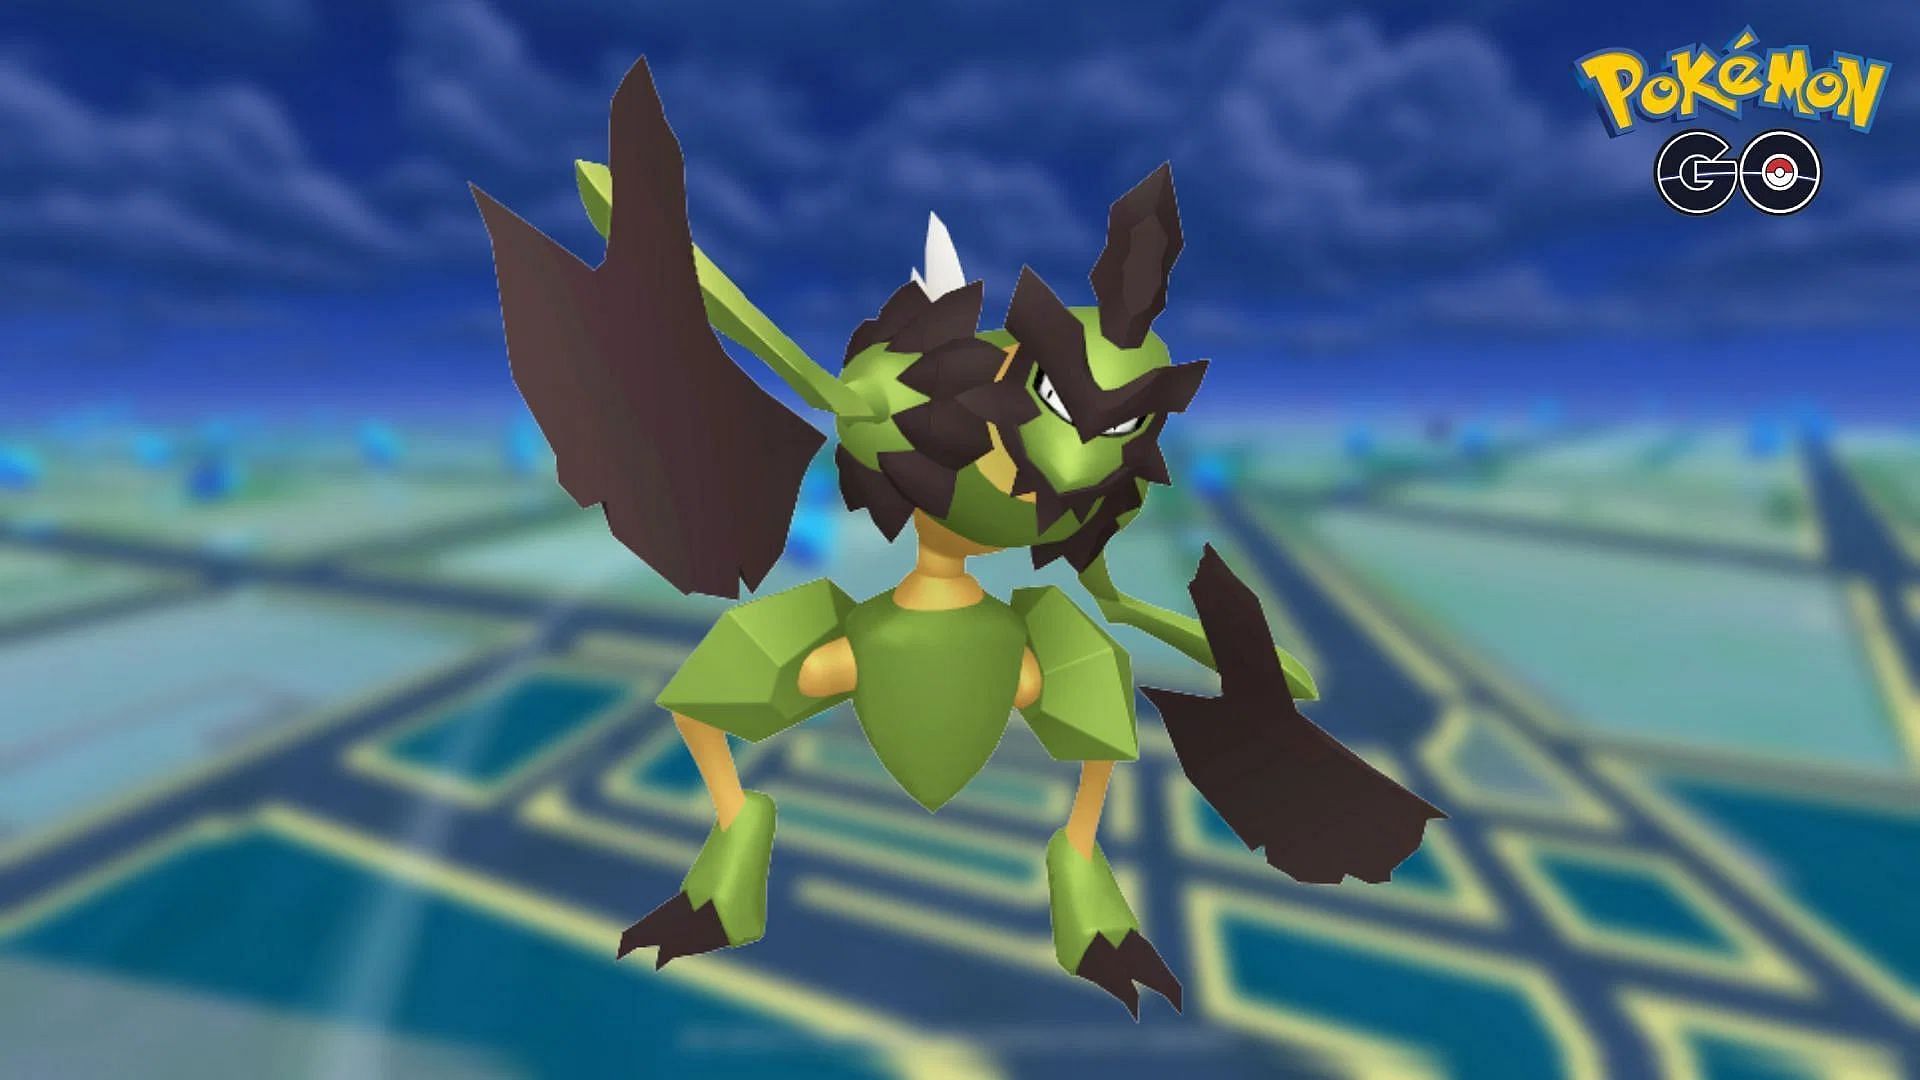 Shiny Kleavor has a green coloration in Pokemon GO (Image via The Pokemon Company)